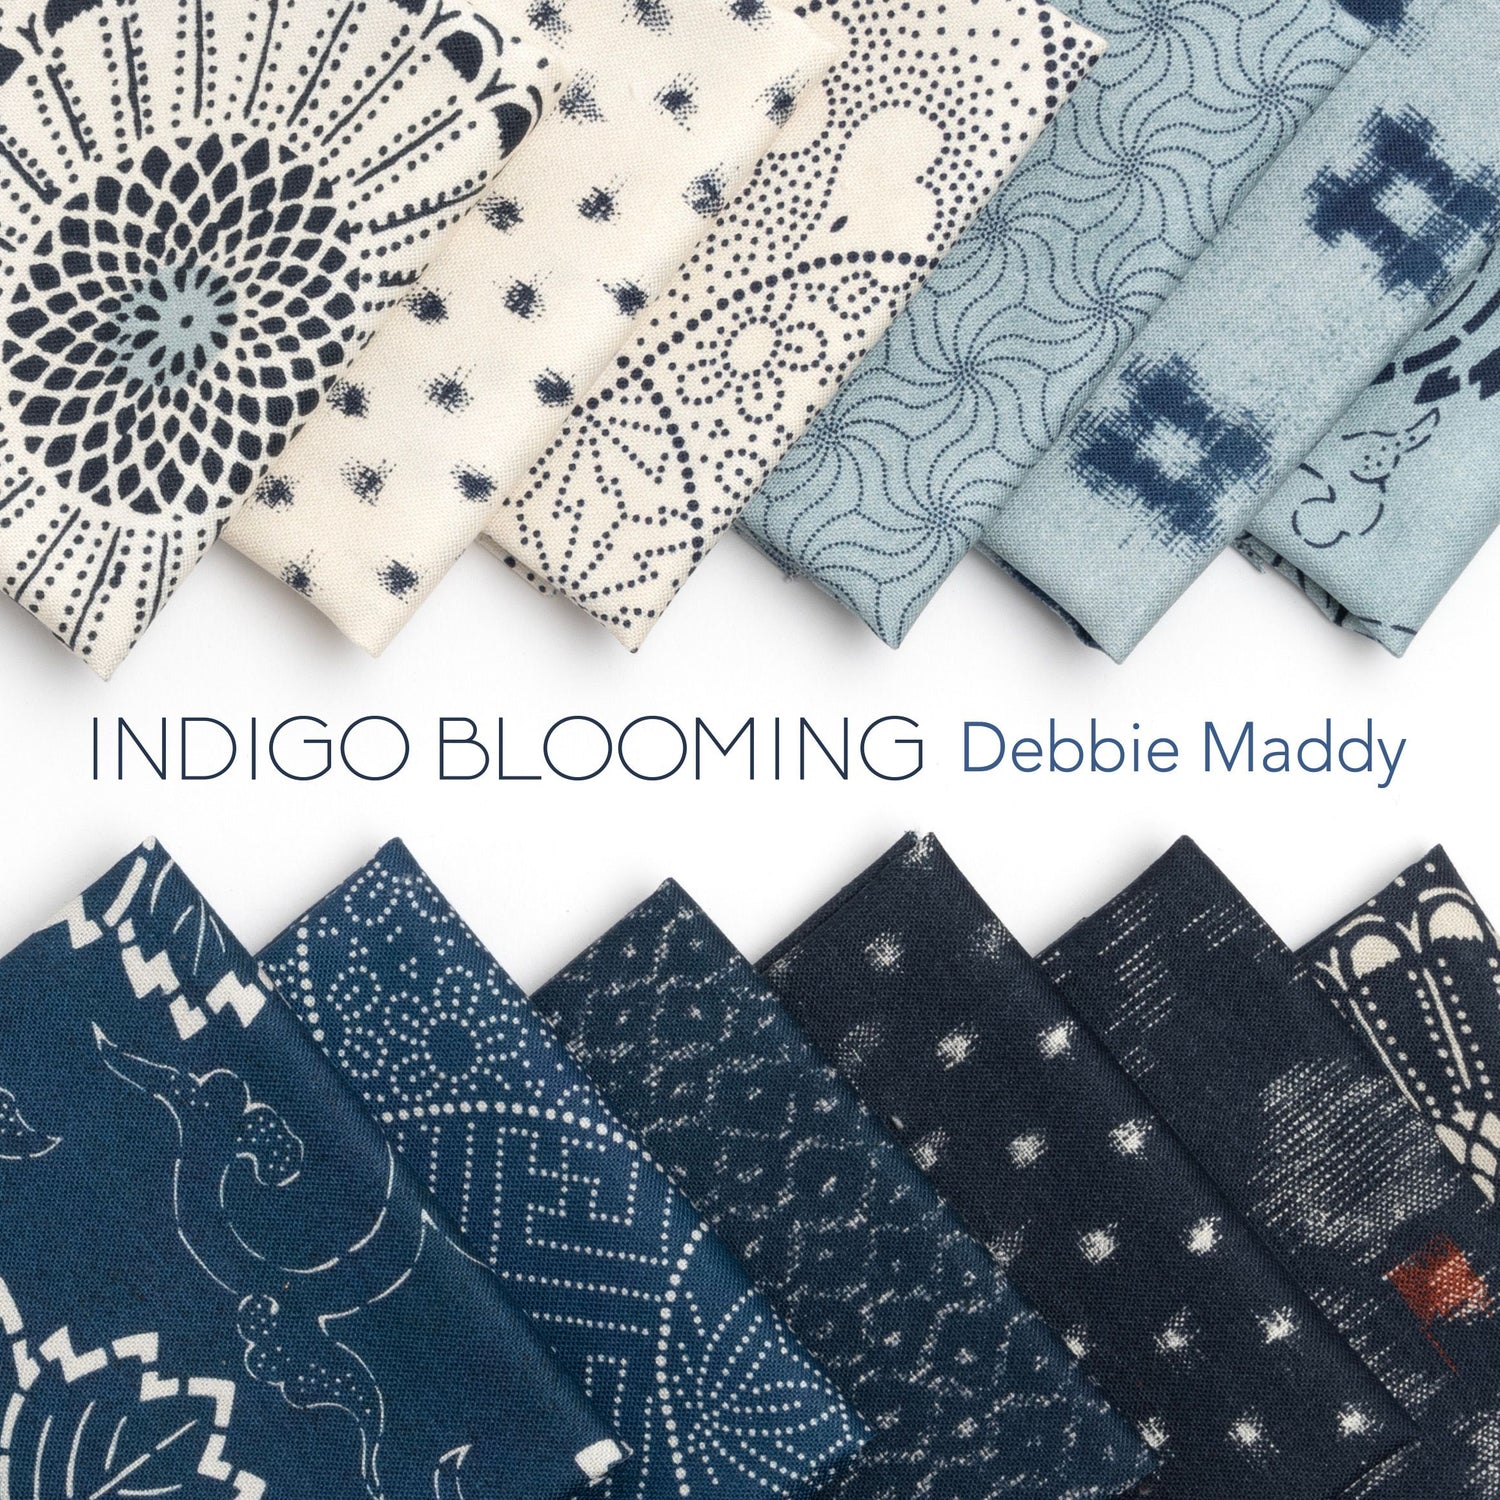 Indigo Blooming by Debbie Maddy